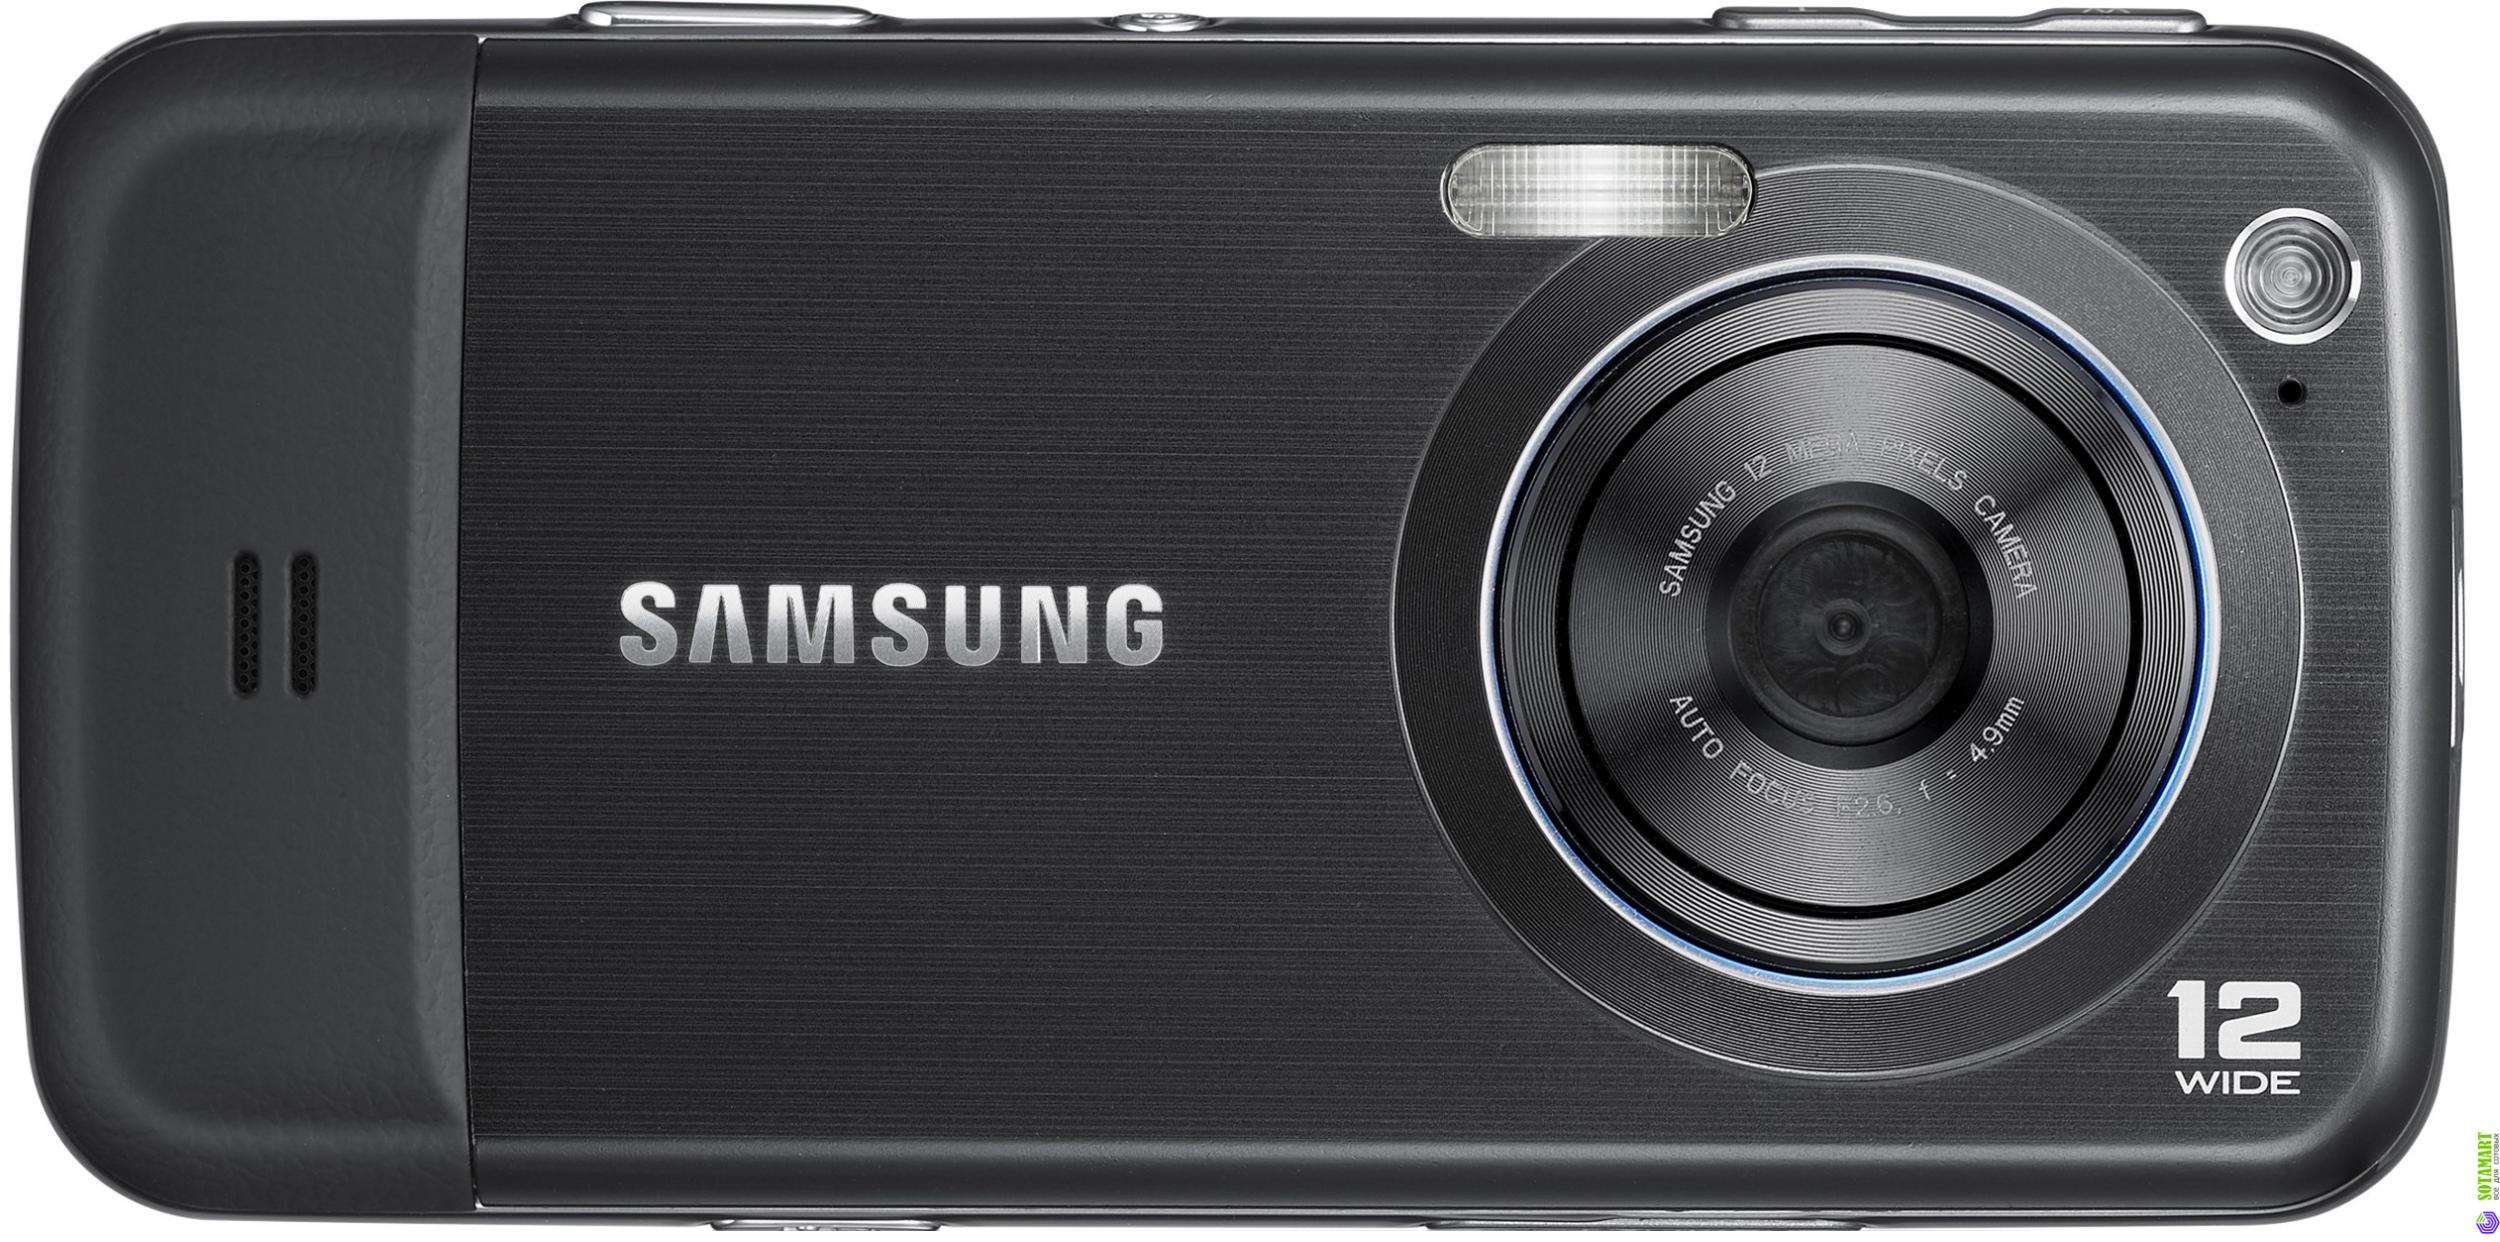 Самсунг м12 память. Samsung m8910 pixon12. Samsung pixon12. Samsung m12. Фотоаппарат Samsung s750.